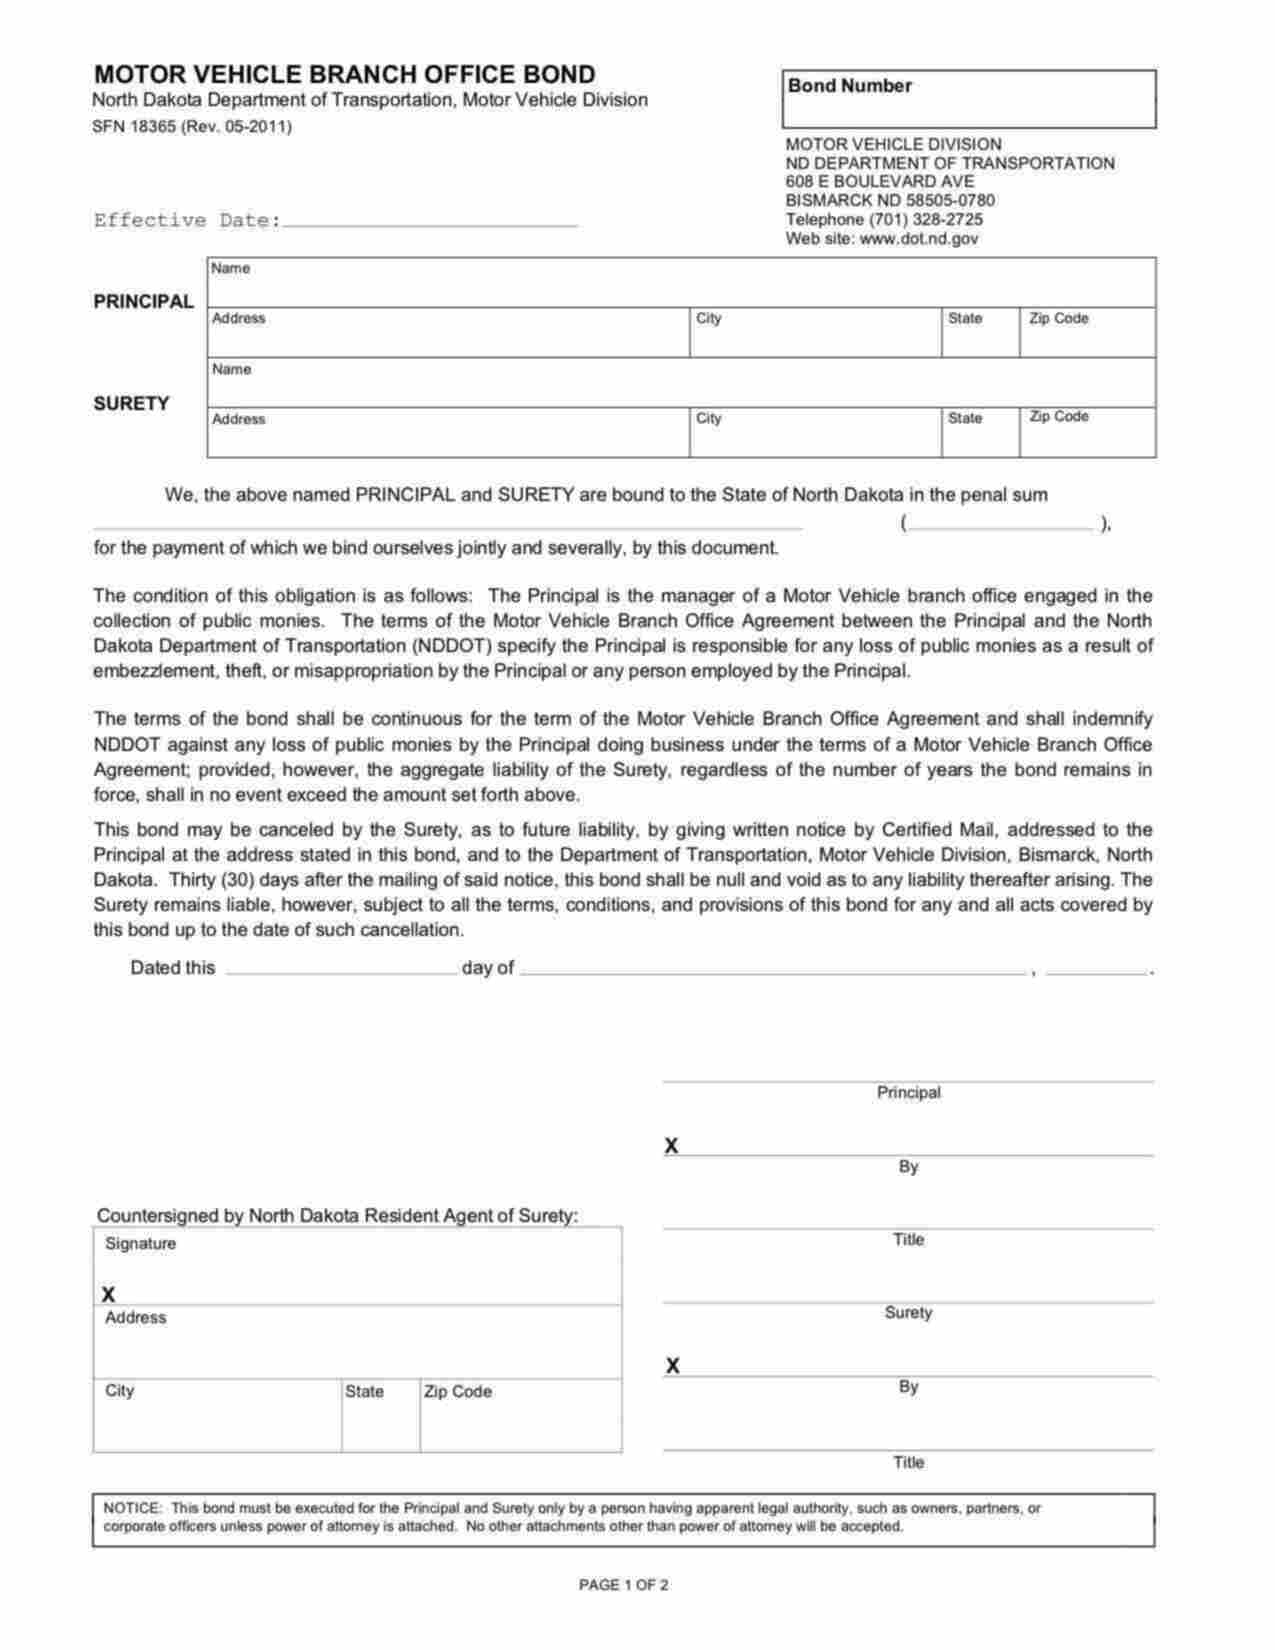 North Dakota Motor Vehicle Branch Office Bond Form